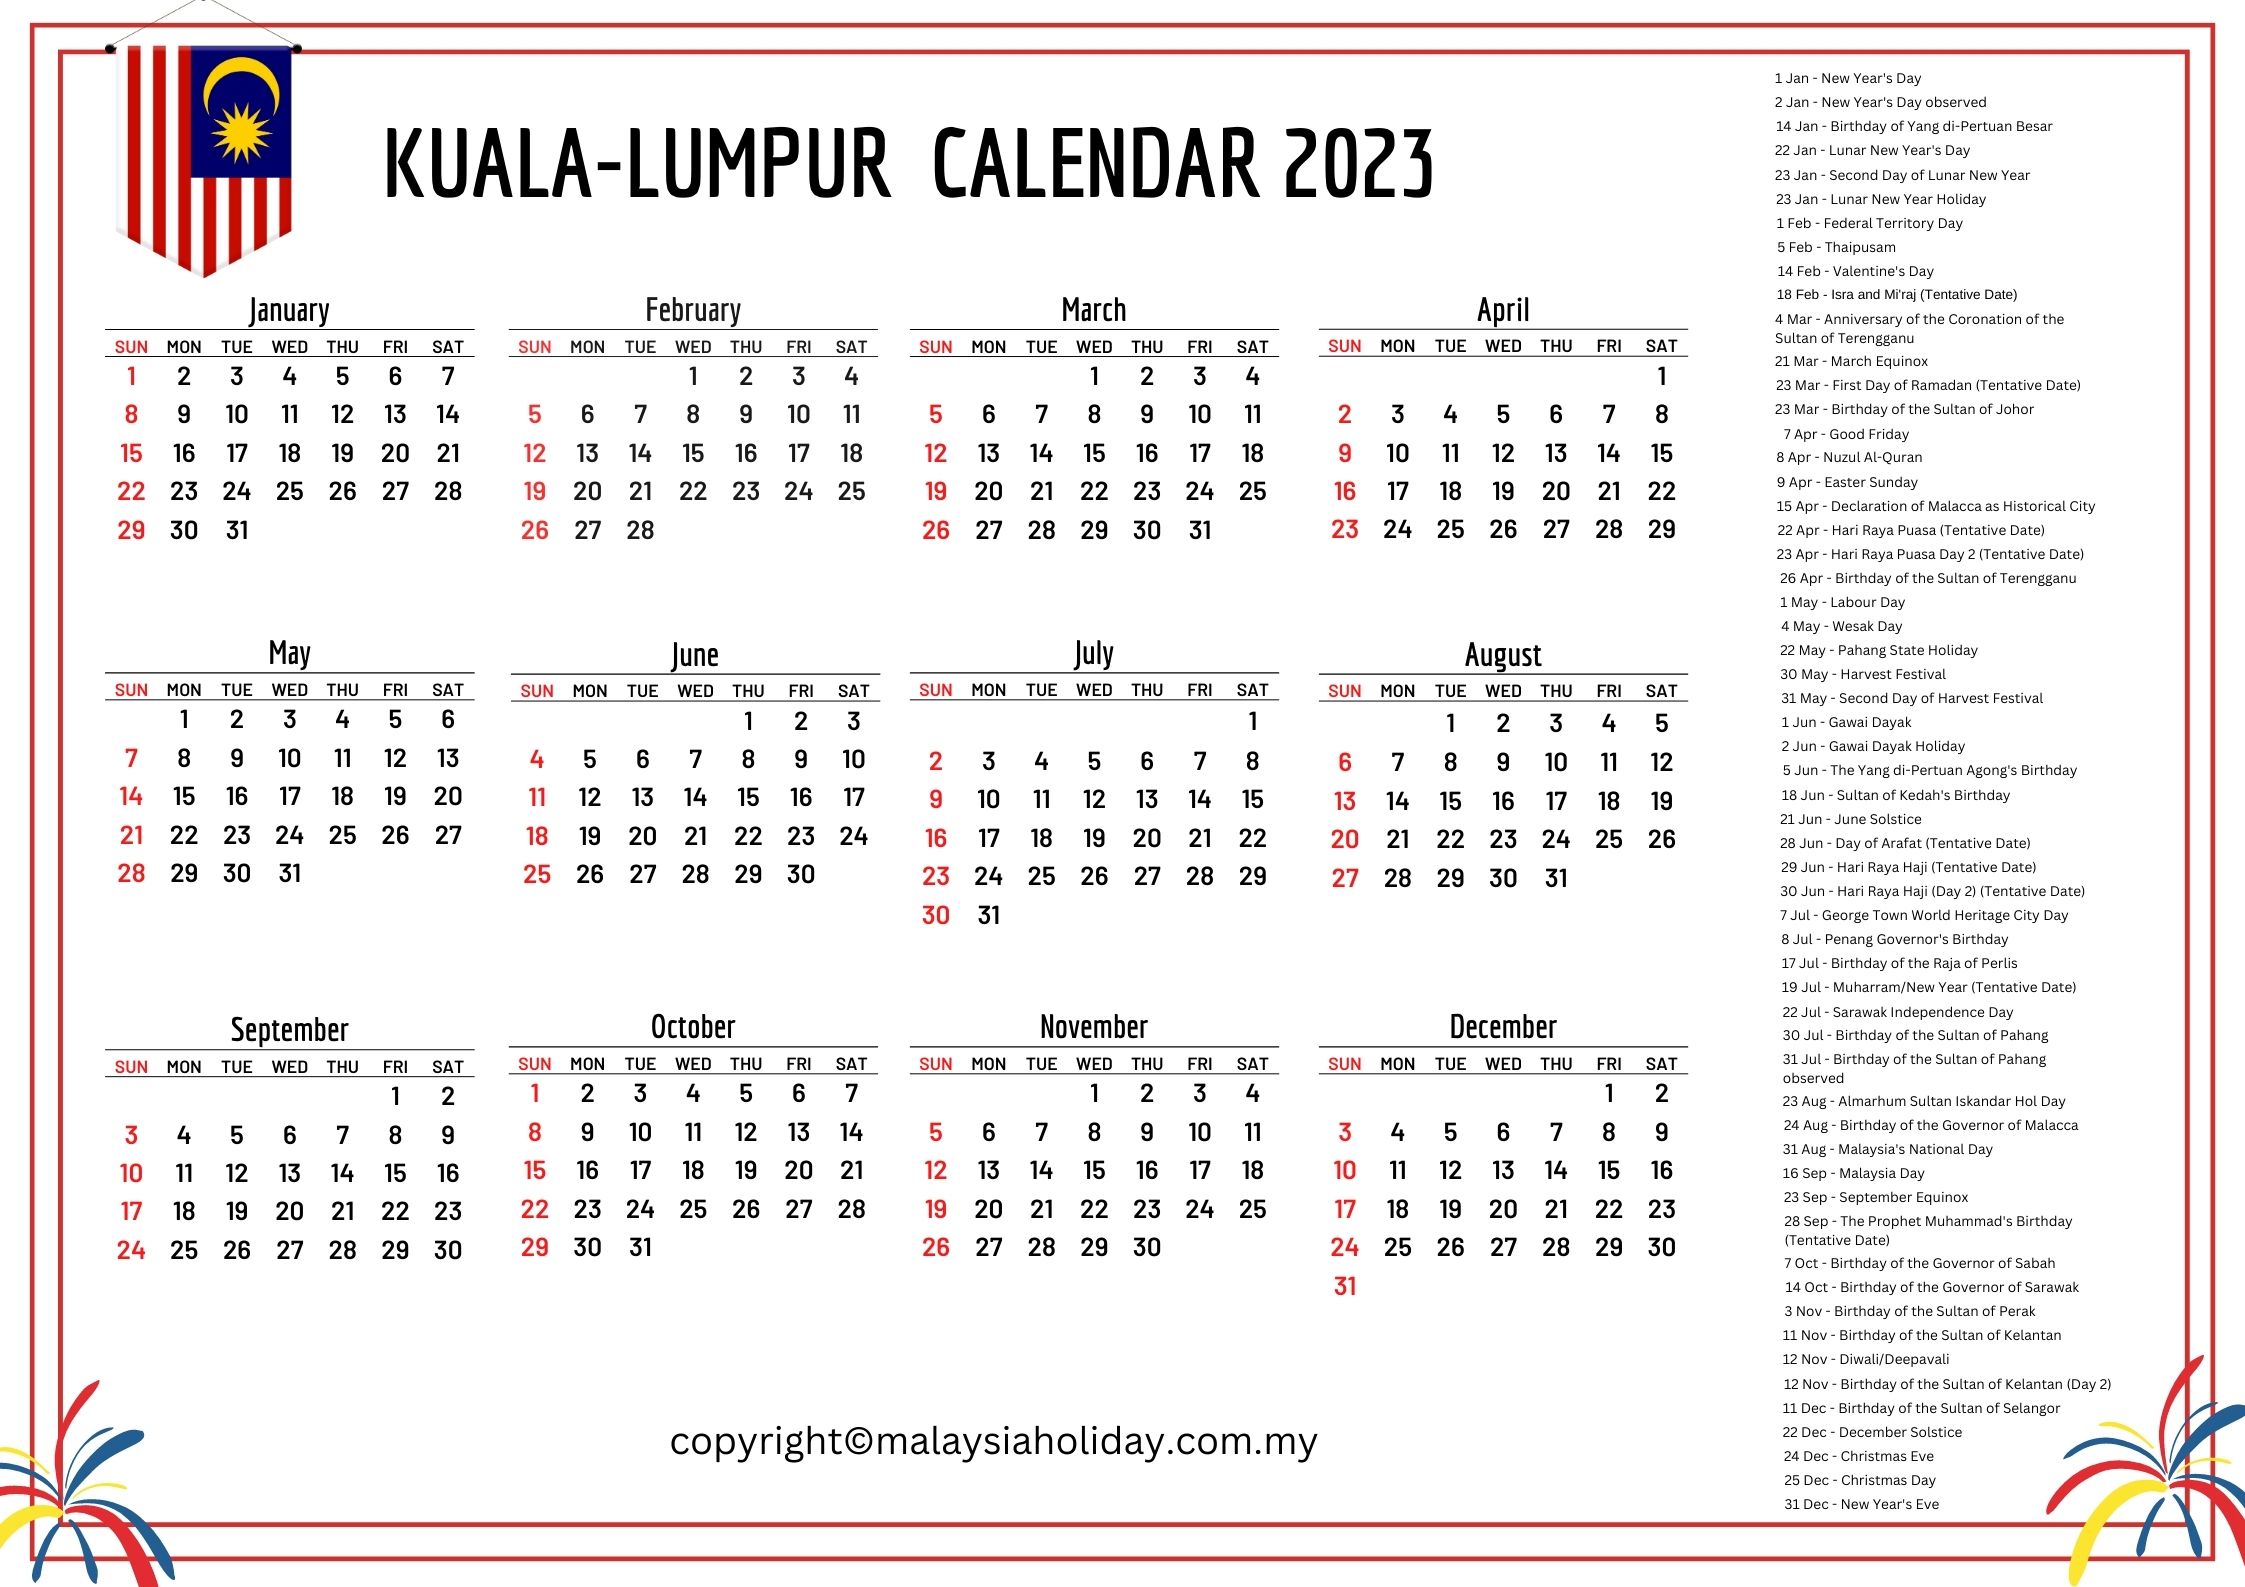 Kuala Lumpur Public Holidays 2023